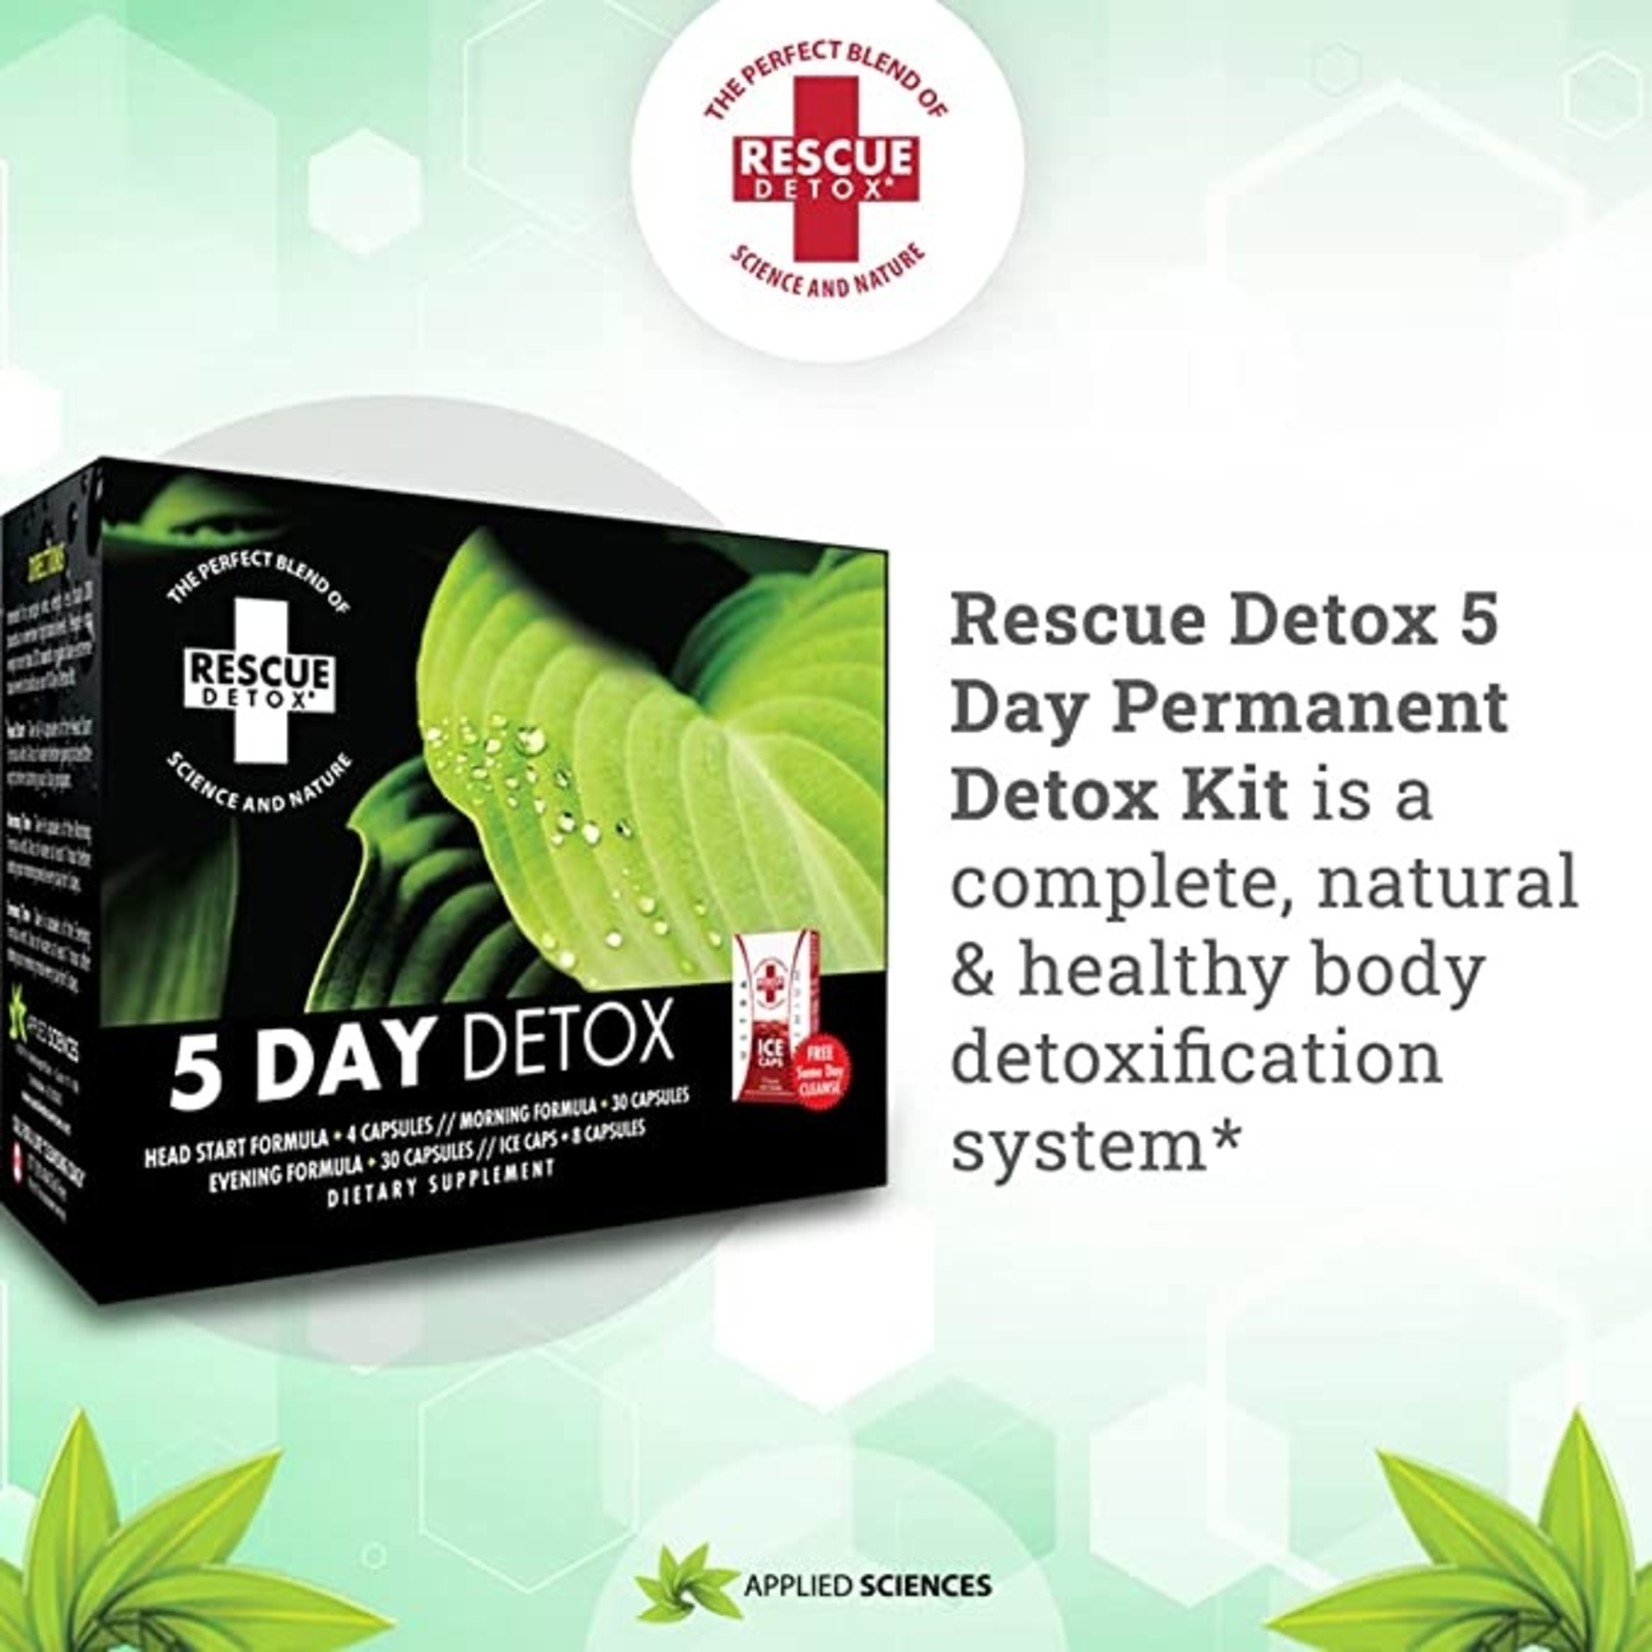 Rescue Detox 5 Day Permanent Detox Kit